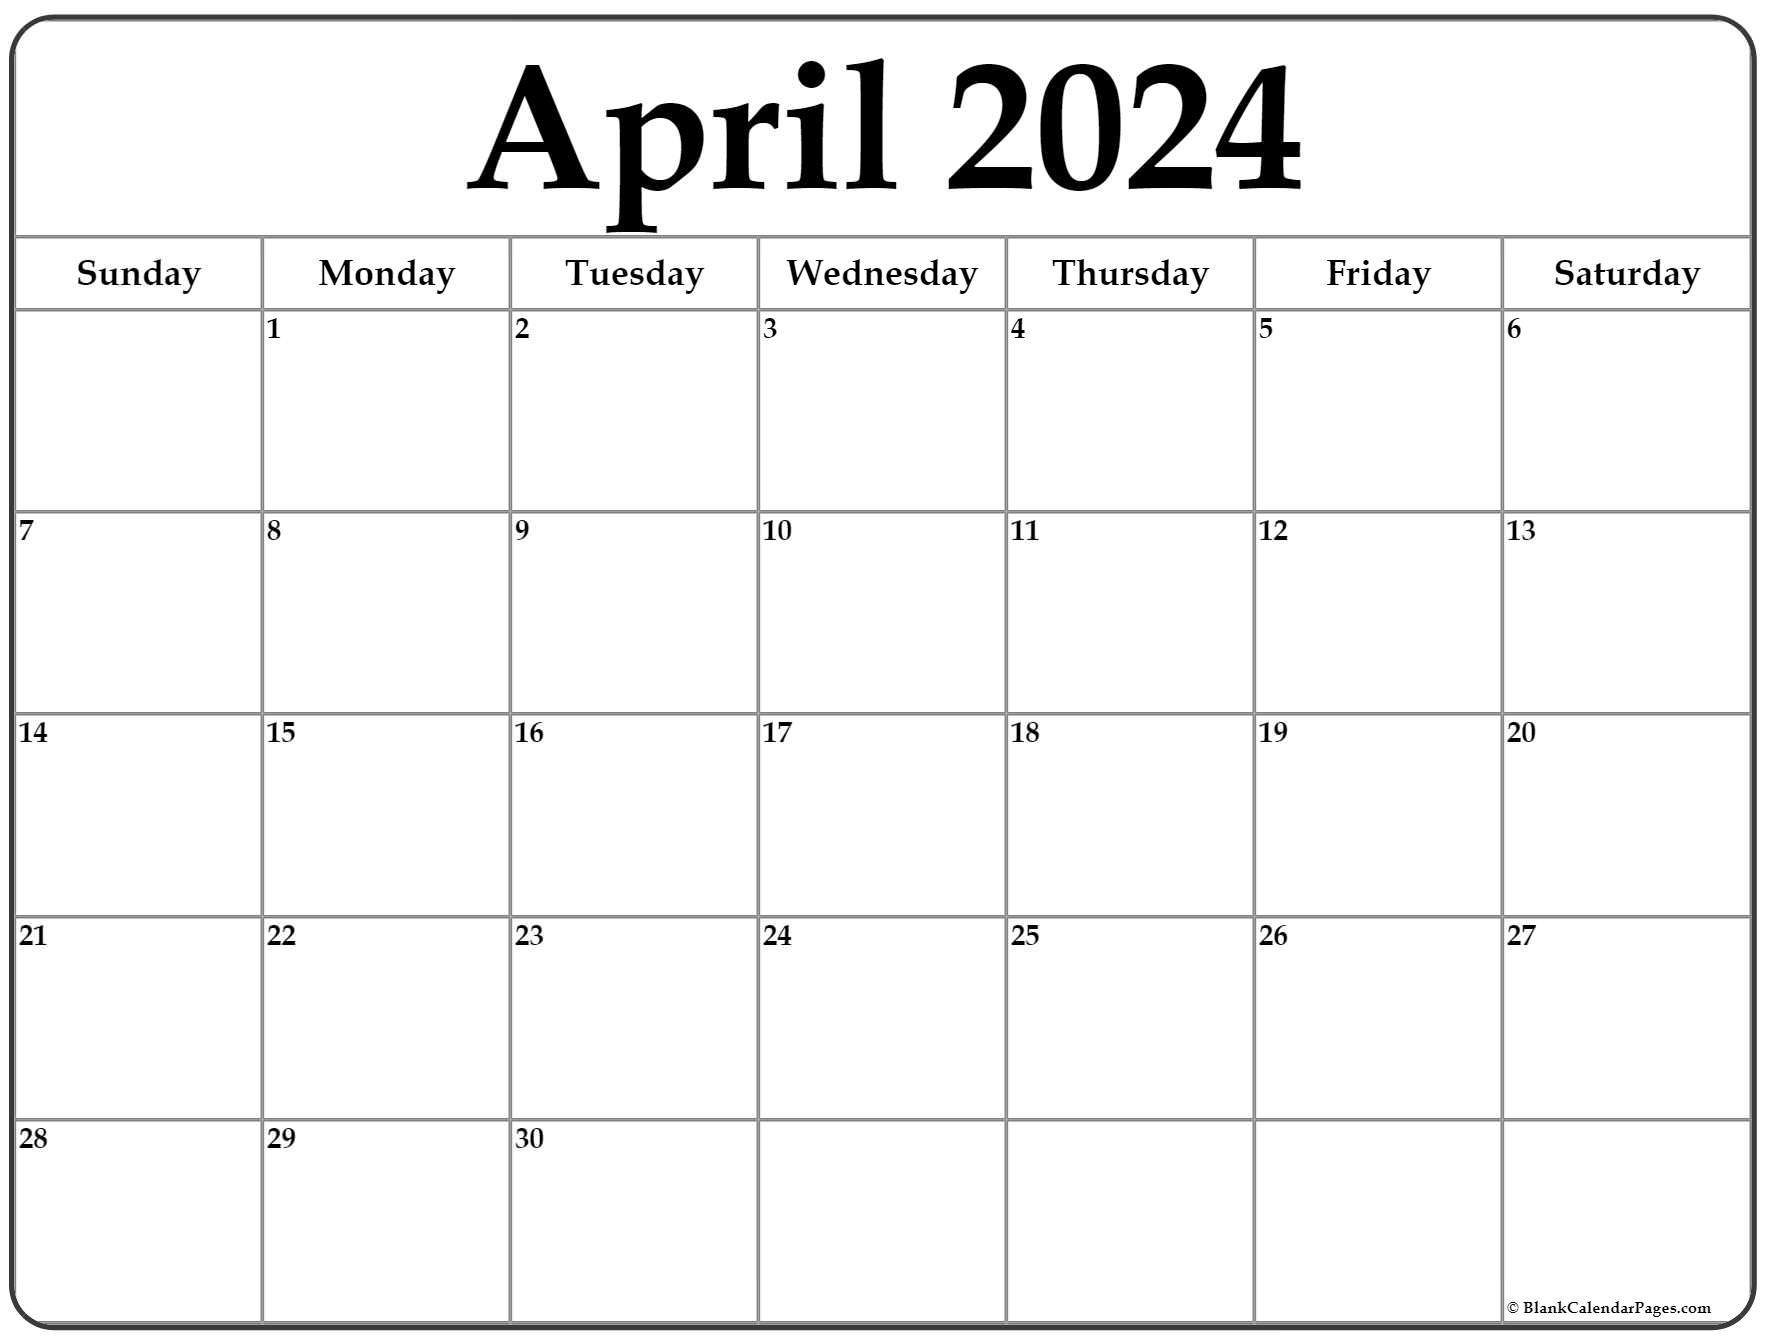 April 2023 calendar | free printable calendar